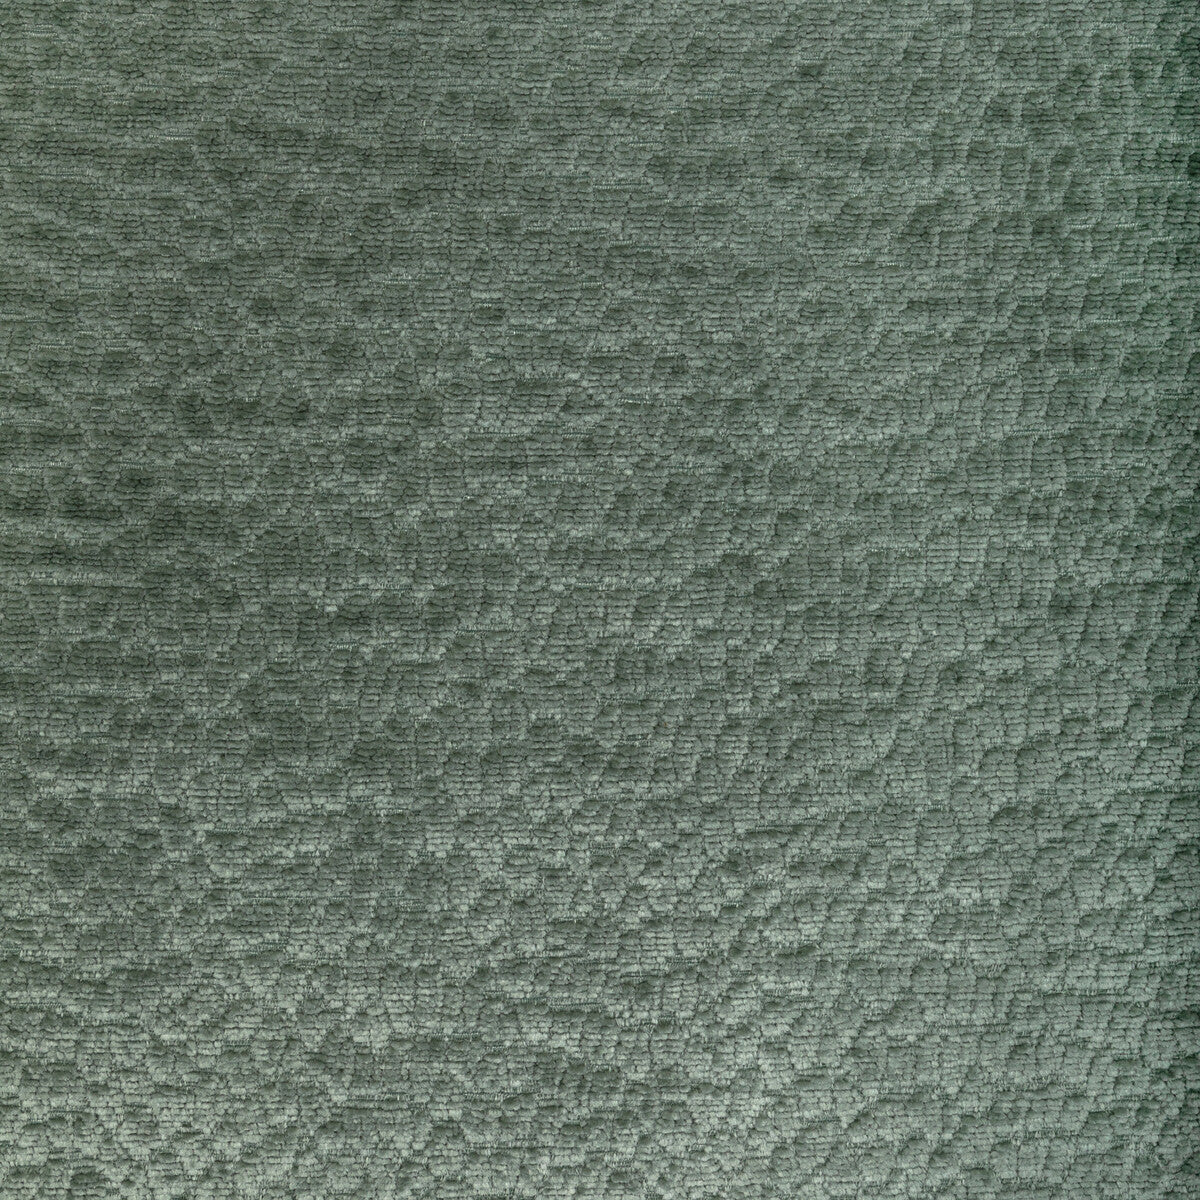 Kravet Smart fabric in 36606-3 color - pattern 36606.3.0 - by Kravet Smart in the Performance Kravetarmor collection